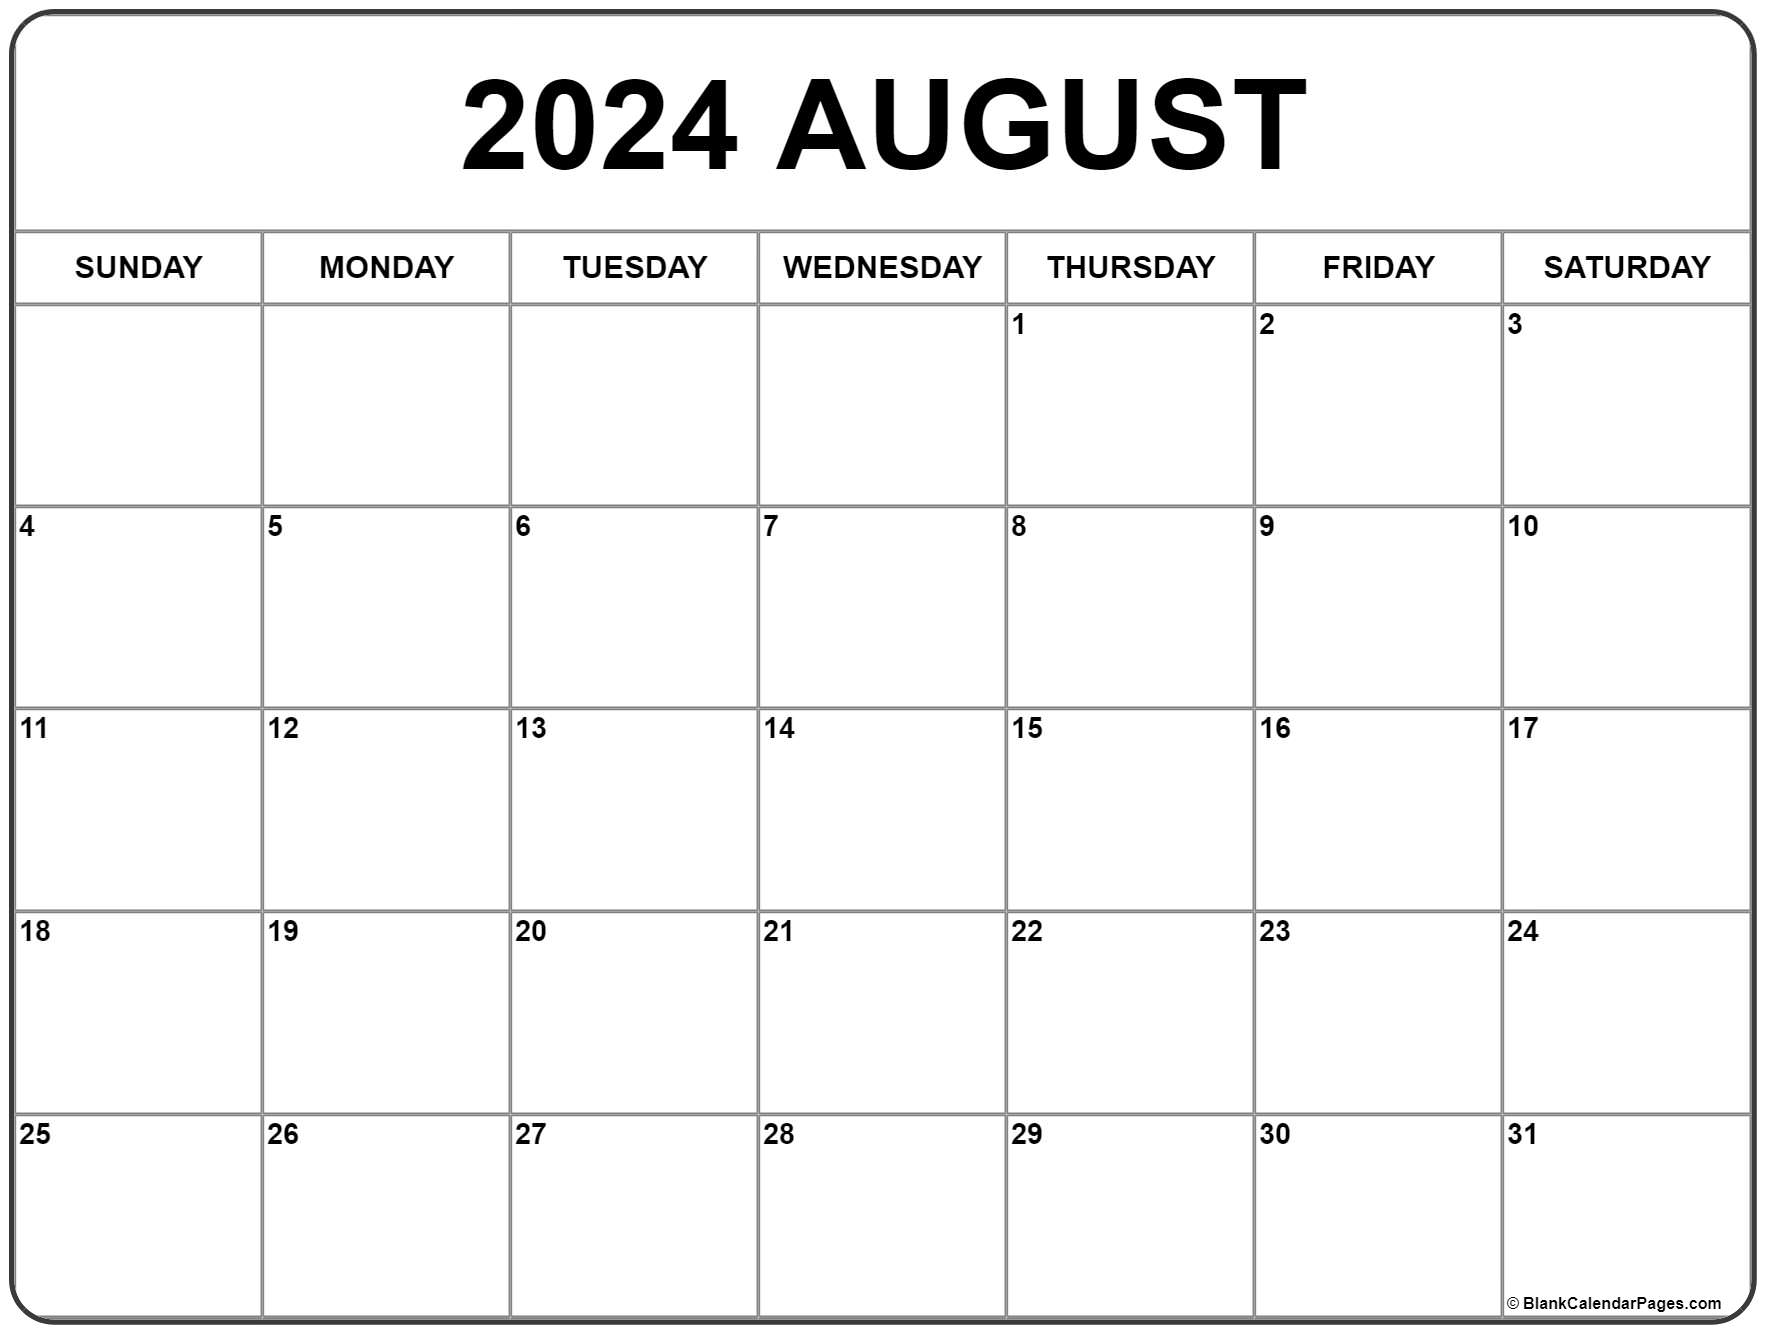 August 2021 calendar free printable calendar templates